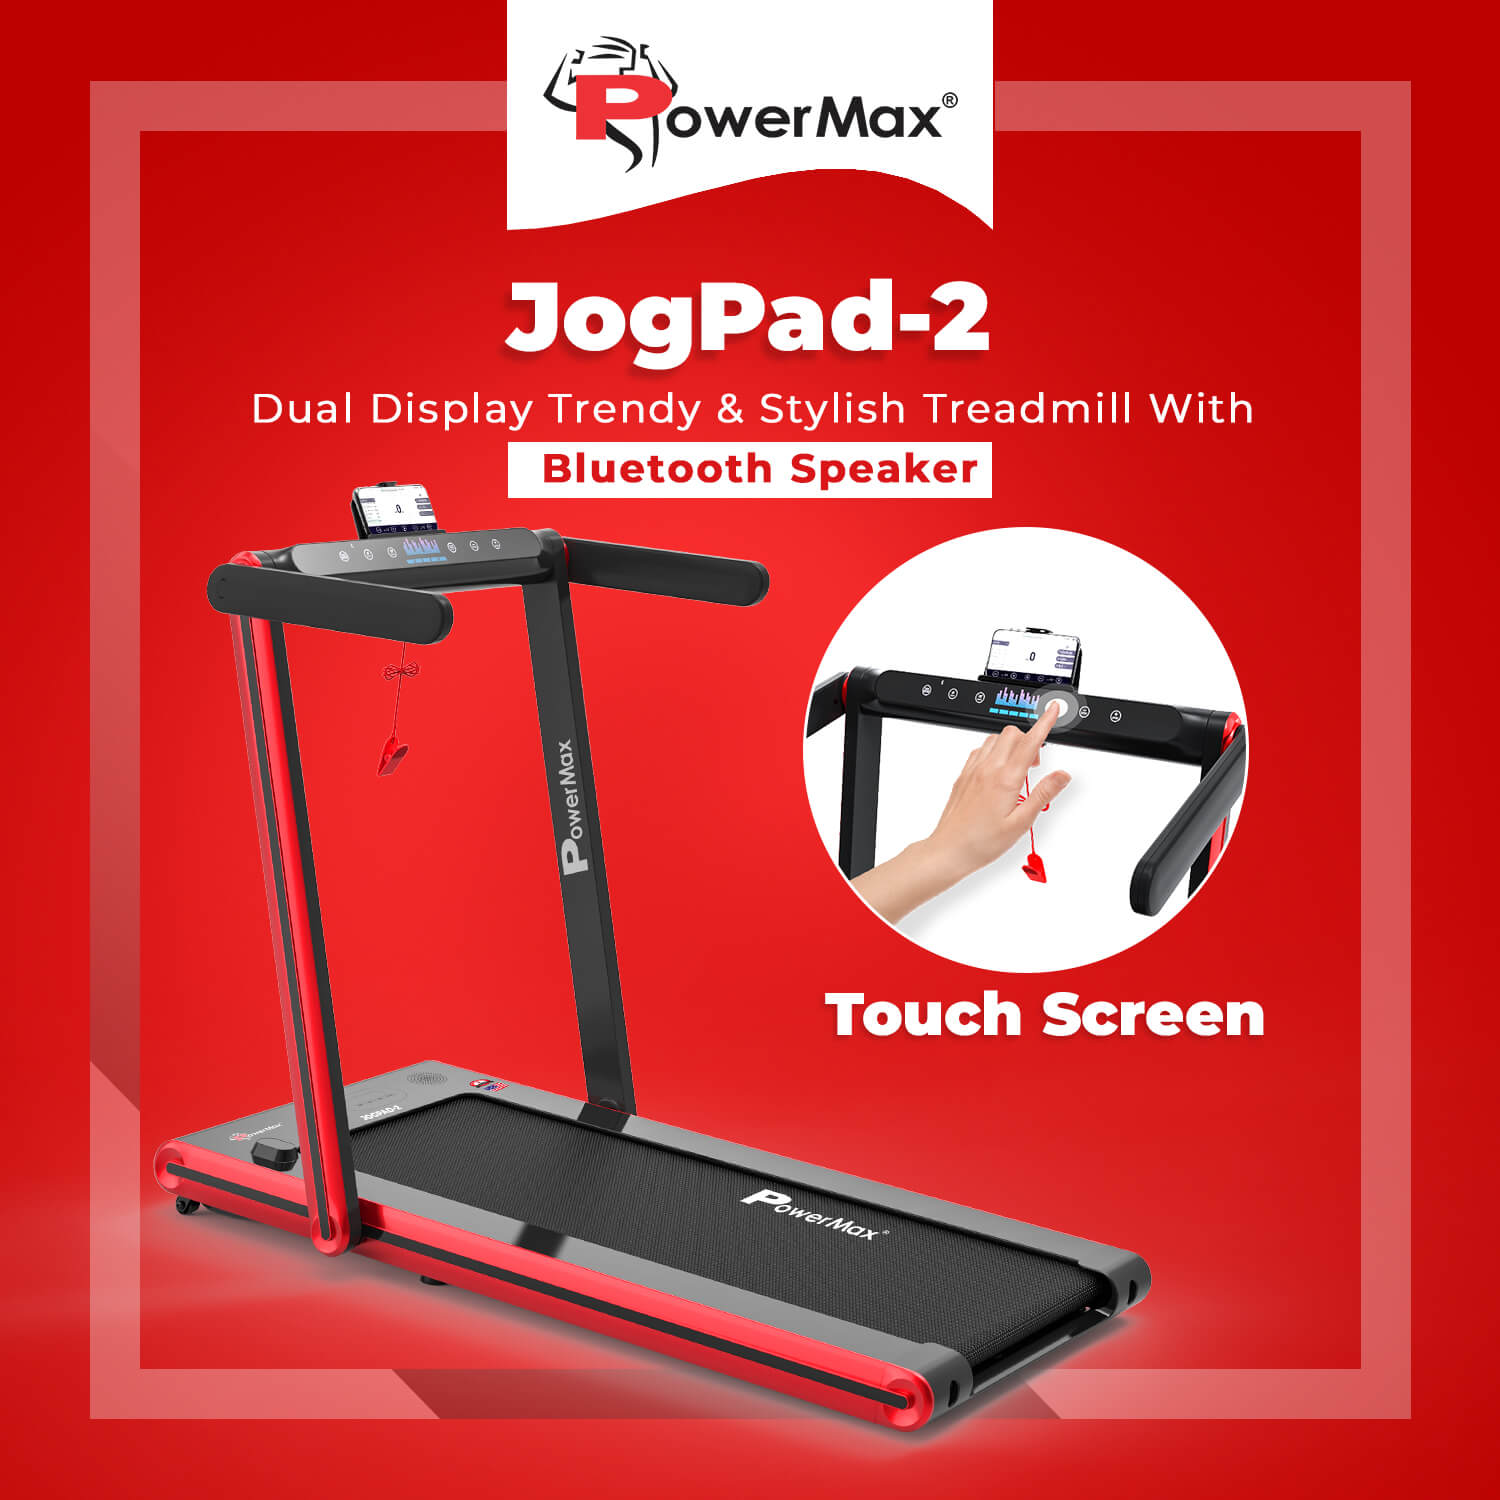 JogPad-2 Dual Display Treadmill with Bluetooth Speaker